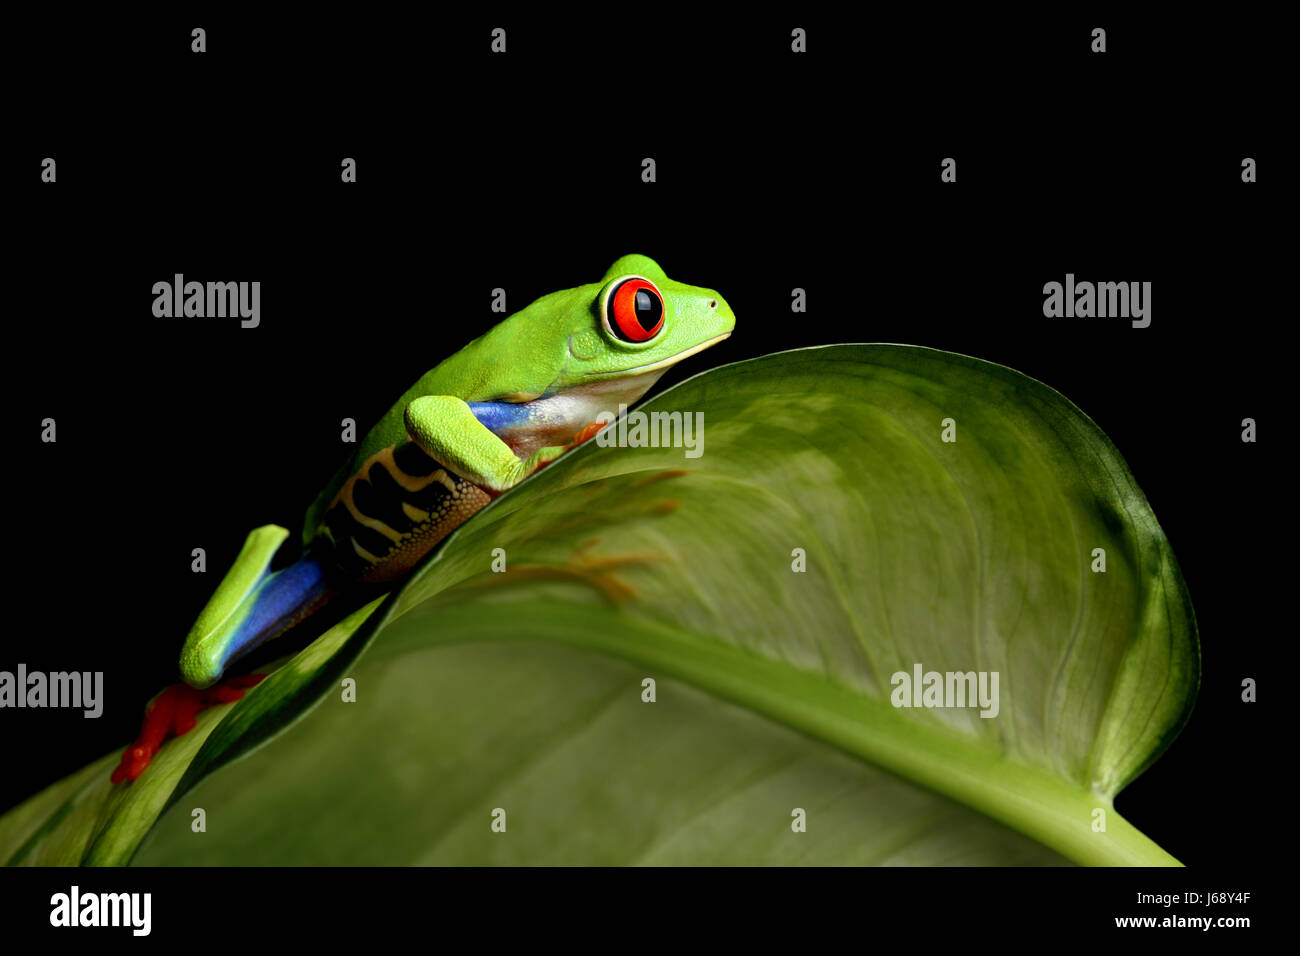 isolierte Amphibien grün schwarz dunkelhäutigen kohlschwarze tiefschwarze Frosch Blatt-Blatt Stockfoto